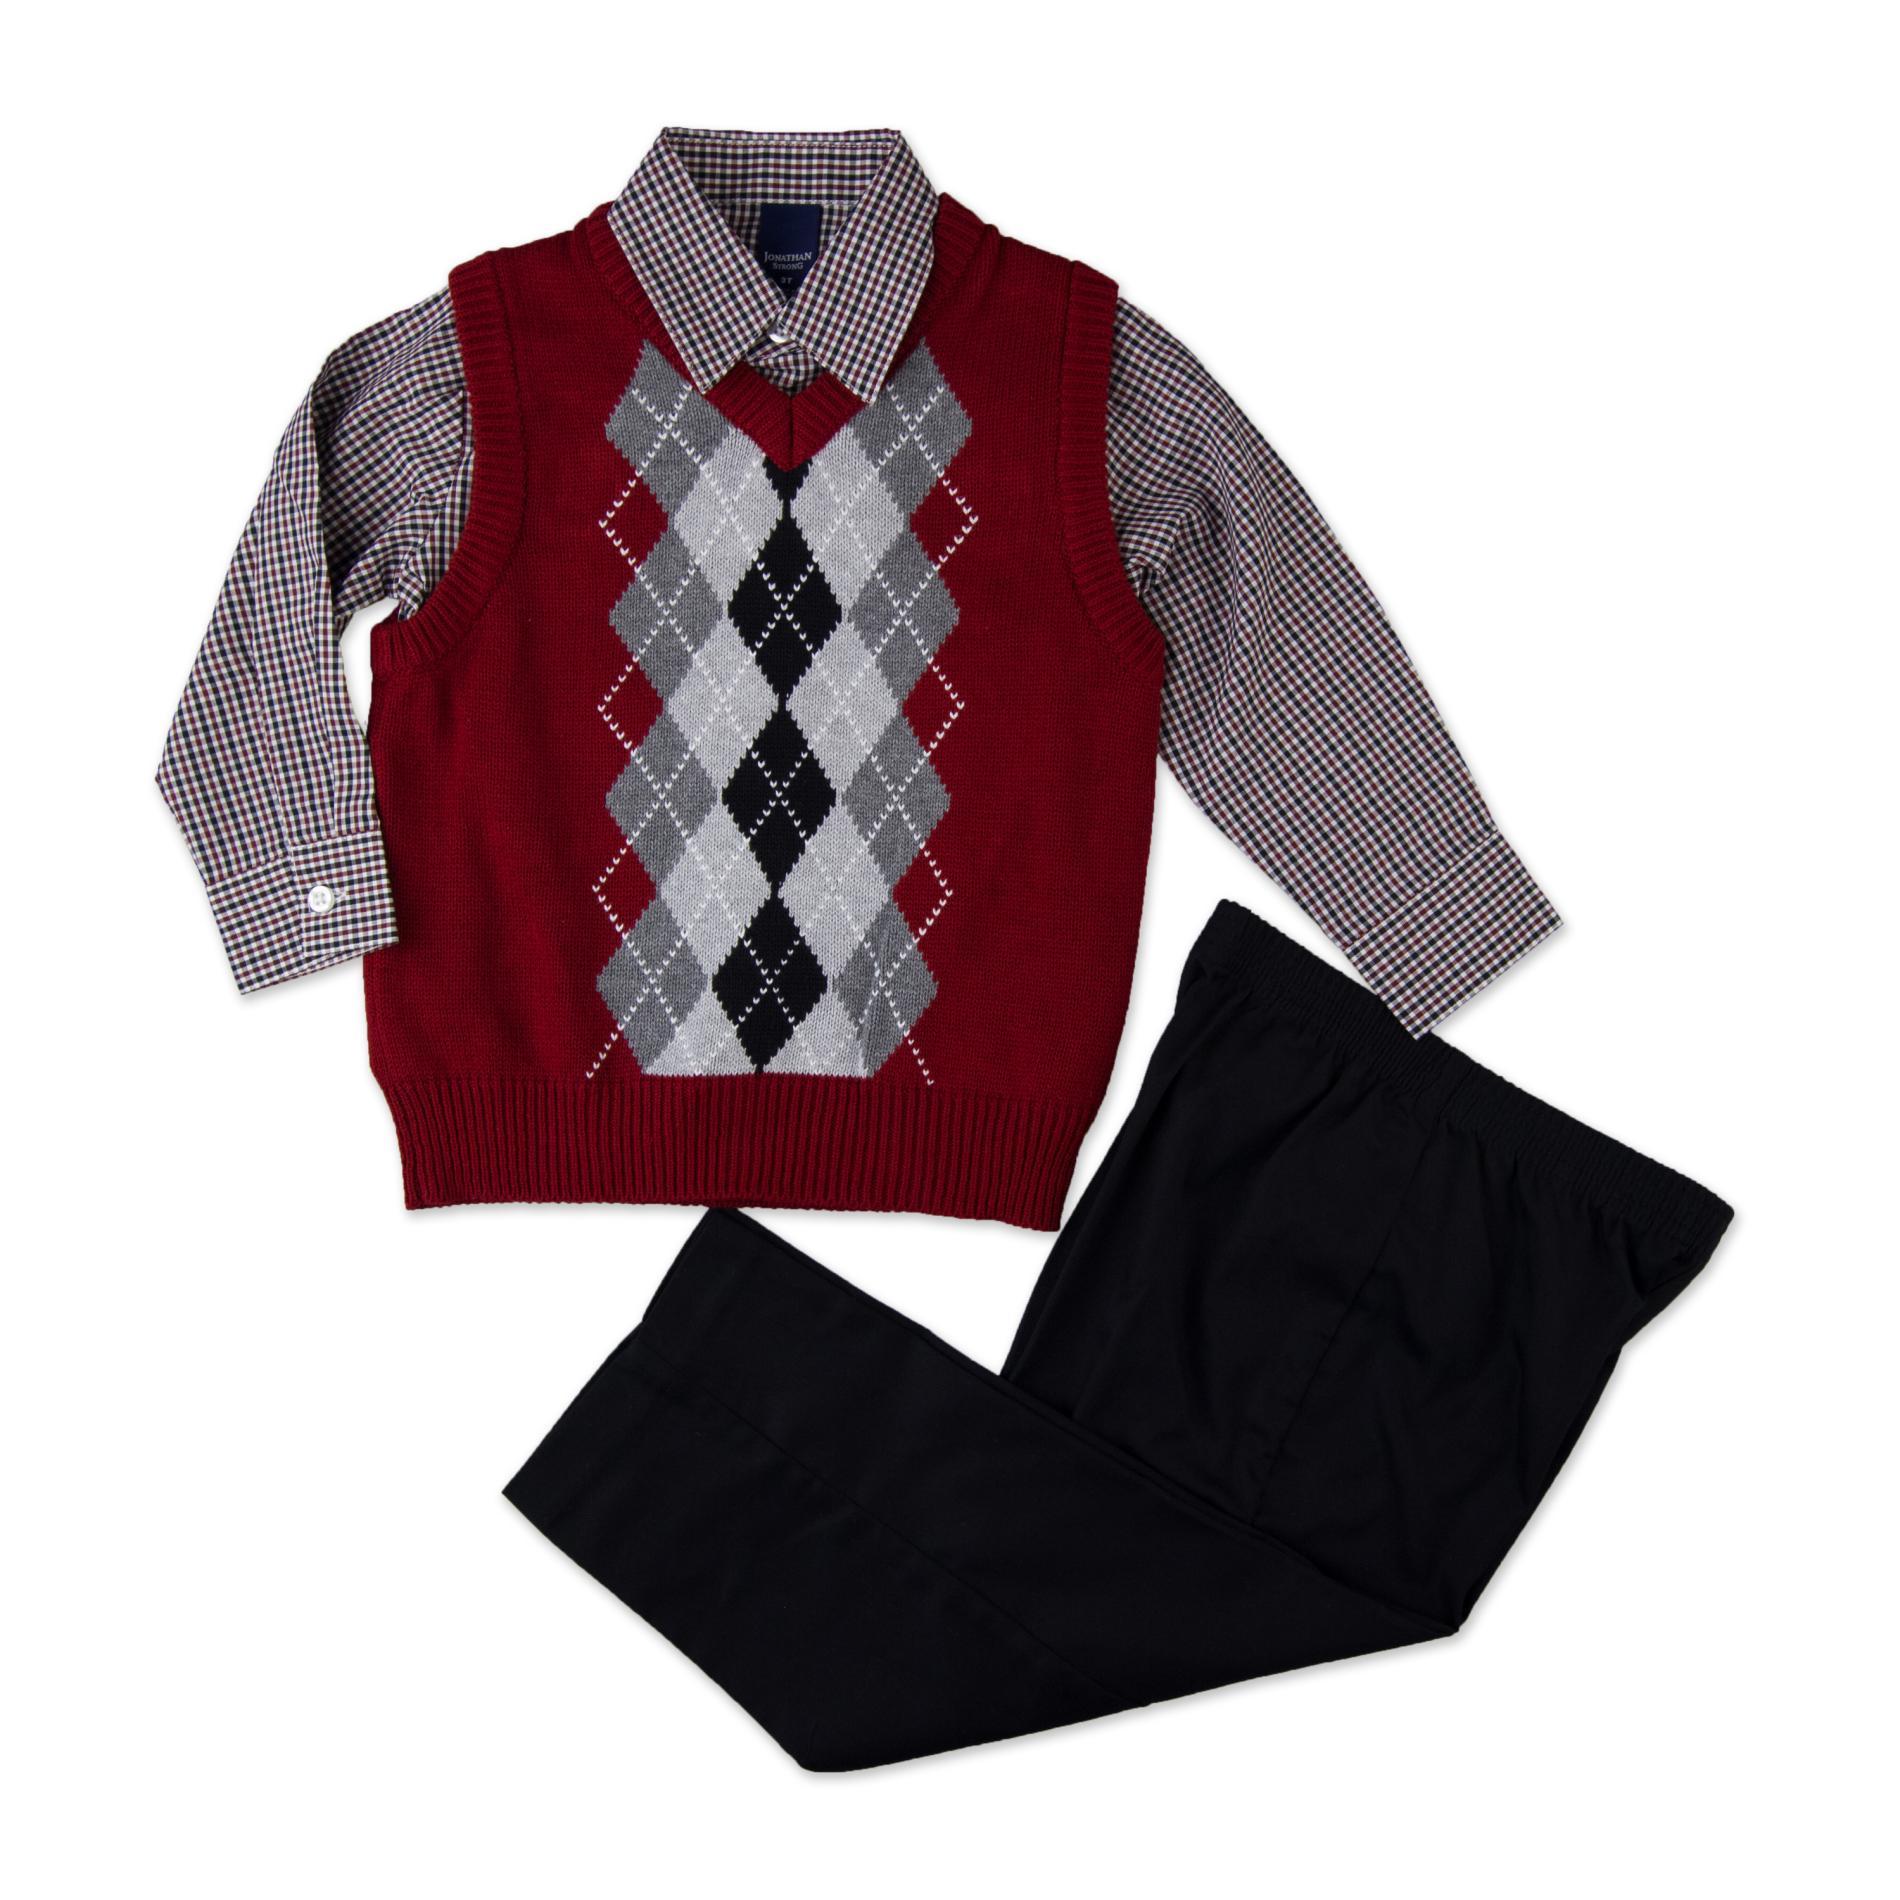 Jonathan Strong Infant & Toddler Boy's Sweater Vest  Shirt & Pants - Argyle